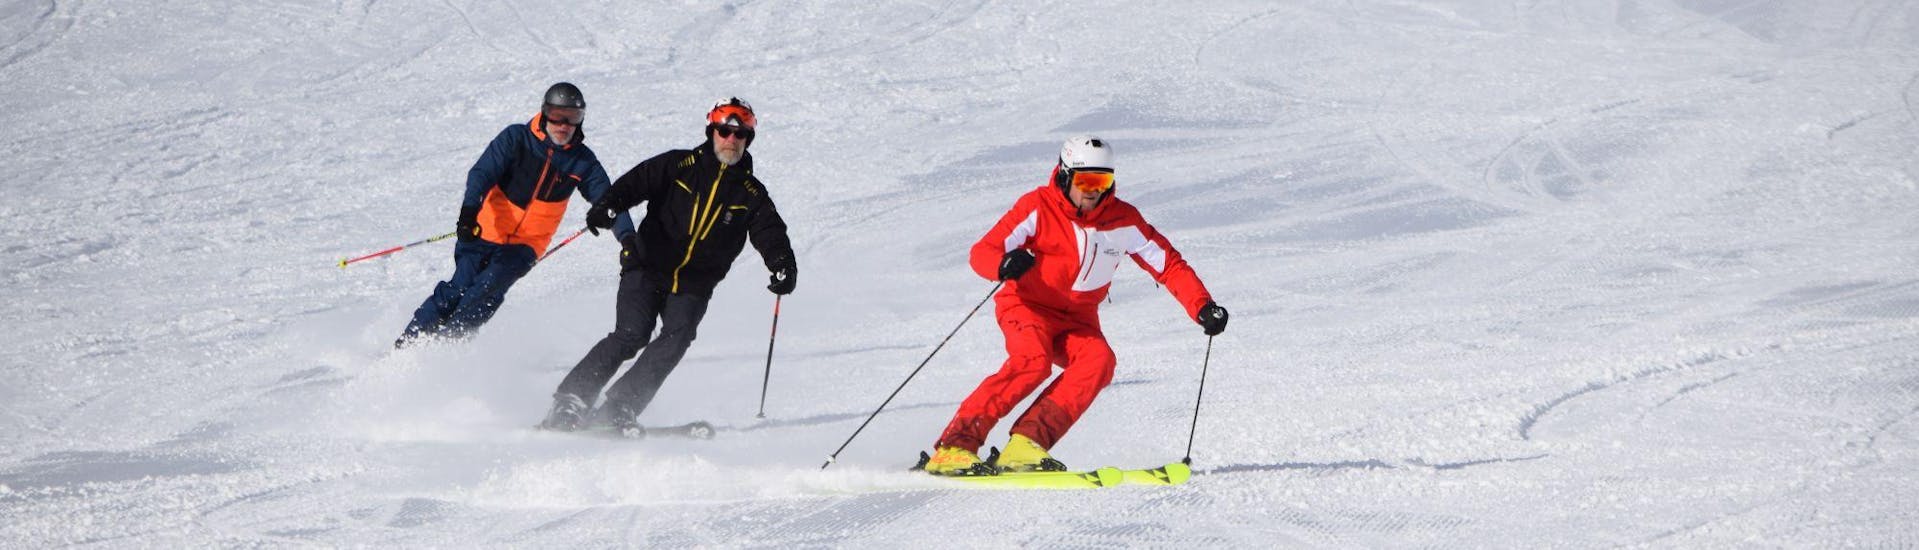 Lezioni private di sci per adulti a partire da 15 anni per tutti i livelli.